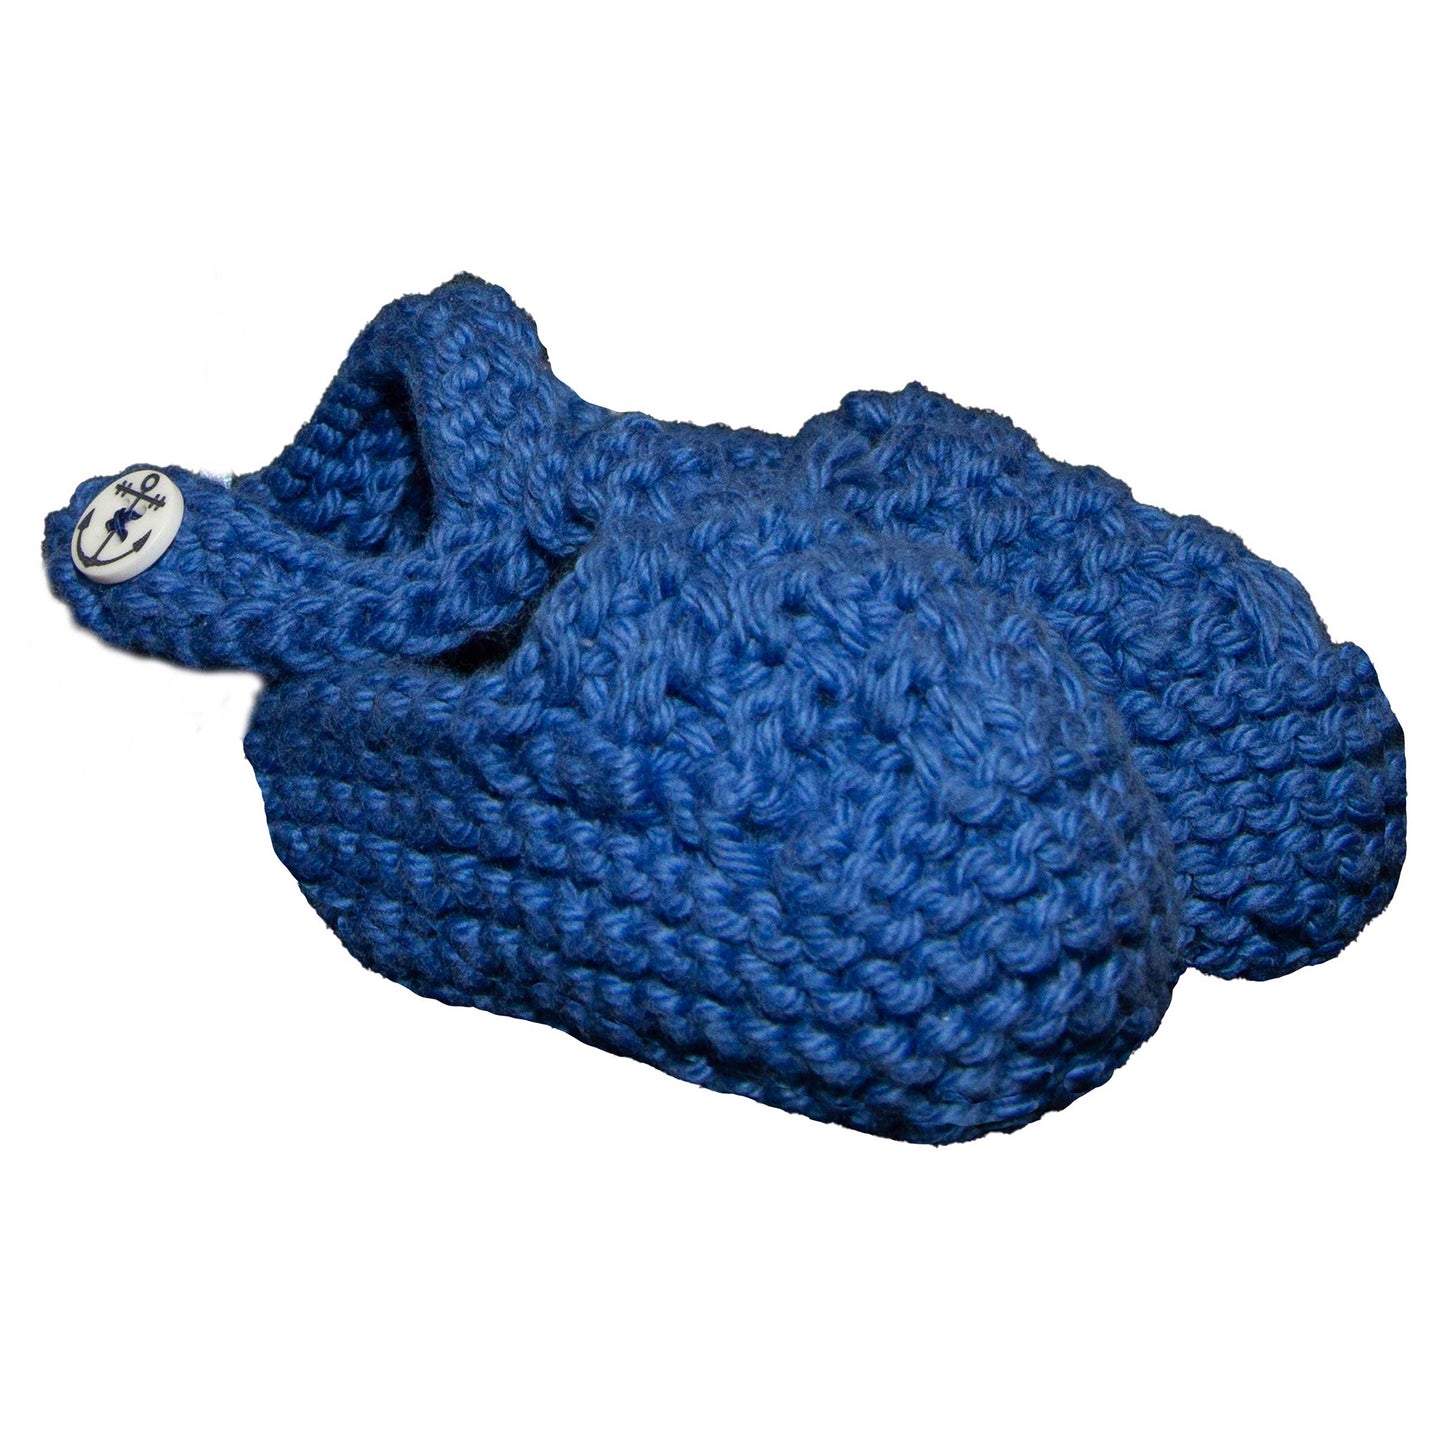 Infant Sandals, 0-6 months, hand knit, basket weave pattern, cotton, washable, Royal Blue